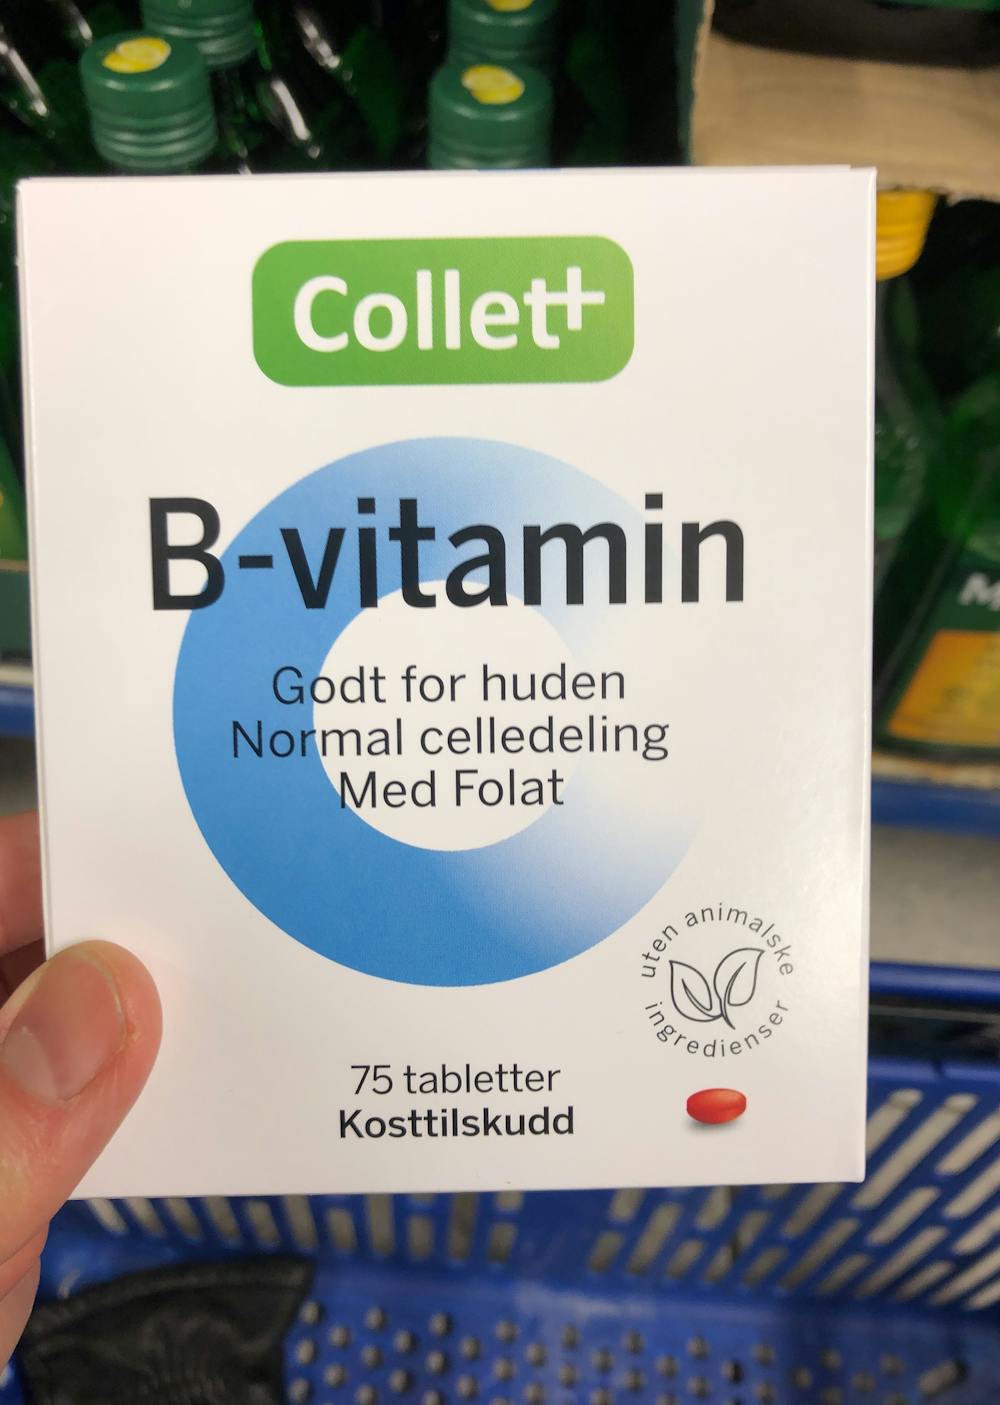 B-vitamin, Collett